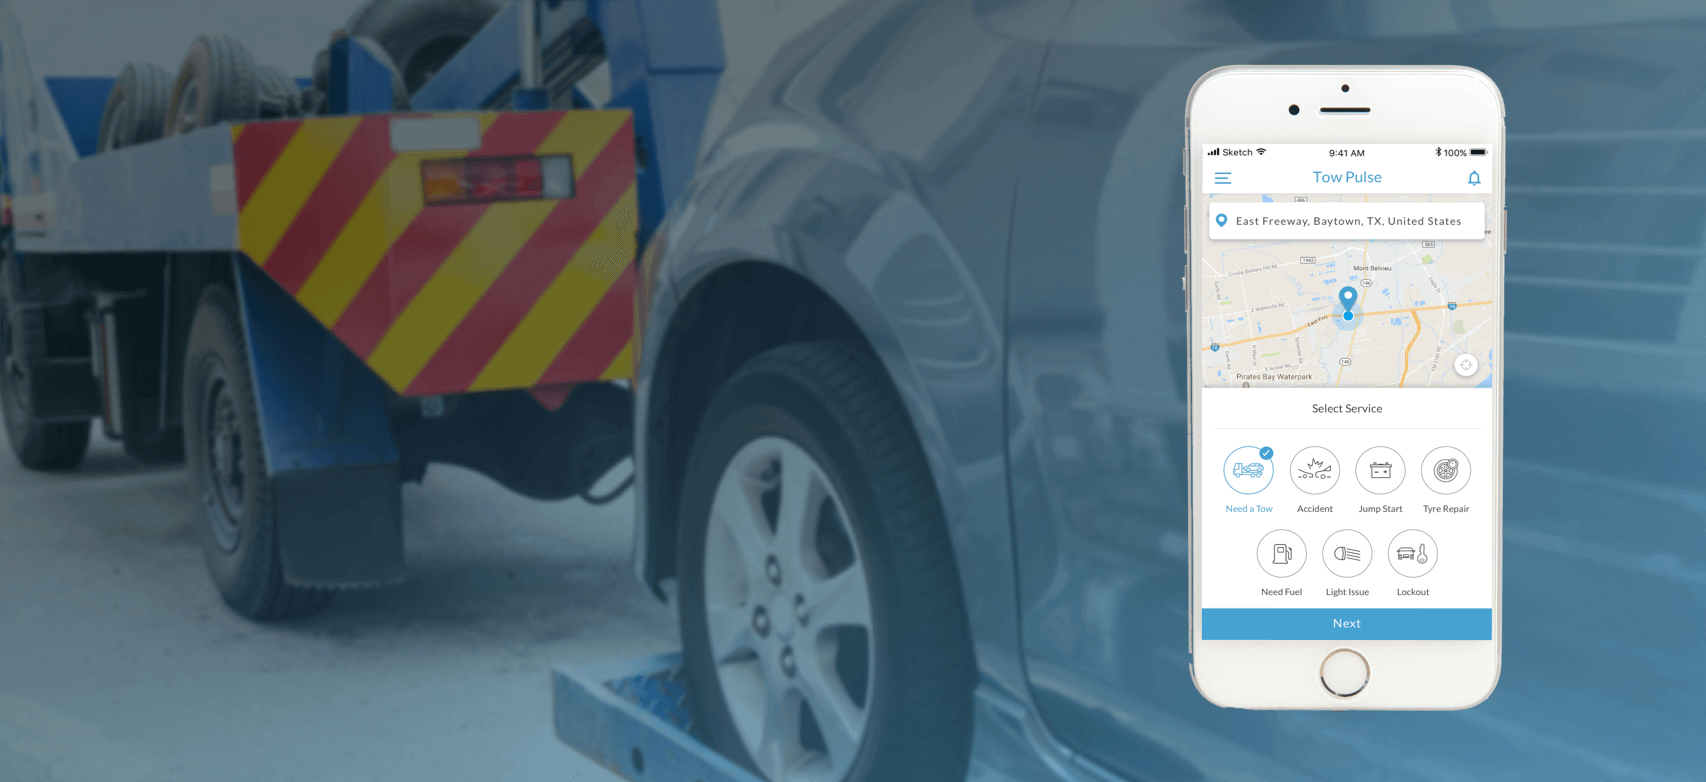 Uber For Tow Trucks App - Roadside Assistance On Demand